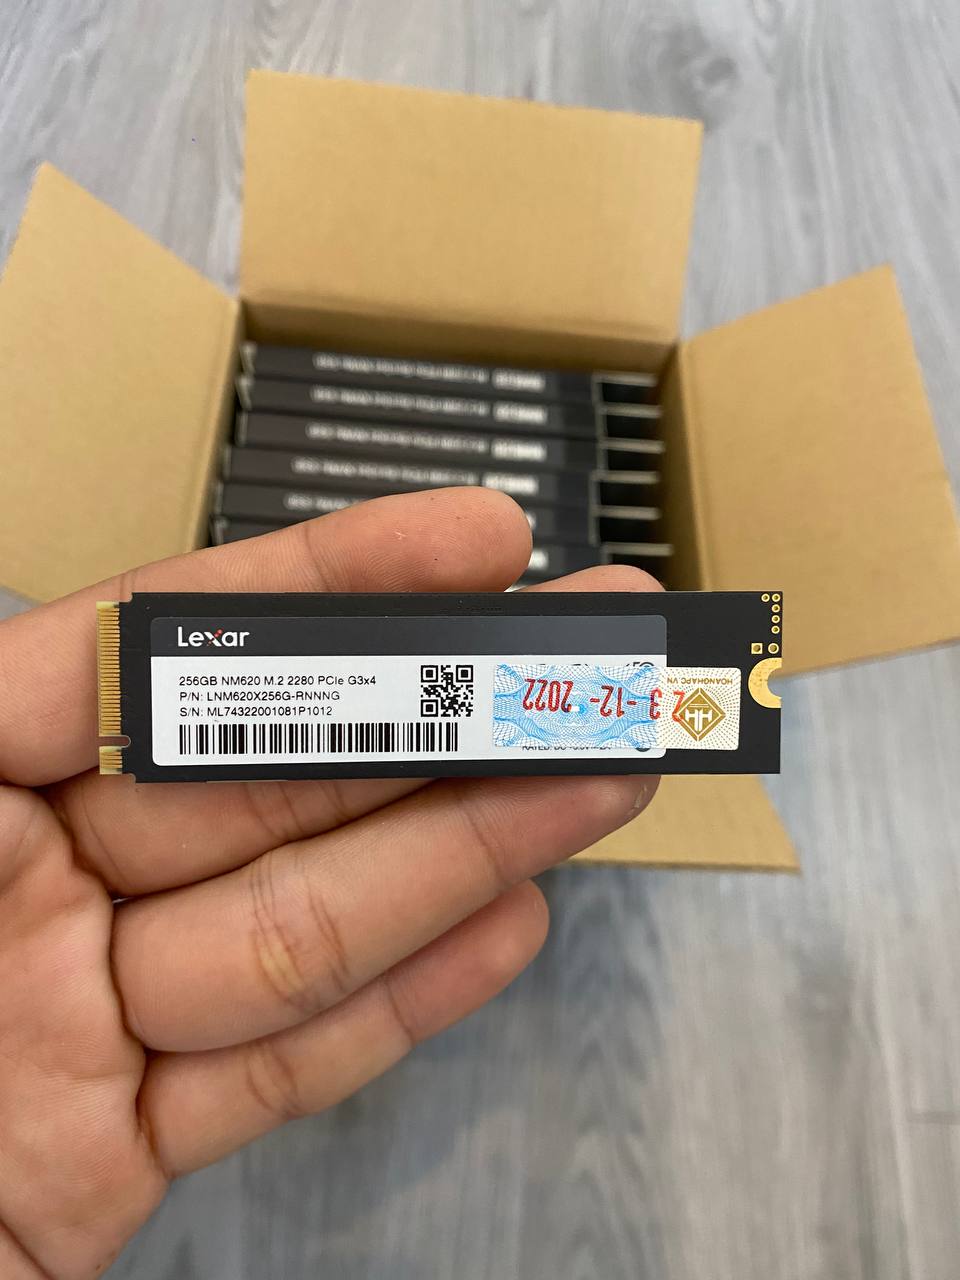 Ổ cứng SSD Lexar NM620 256GB BH 12.25